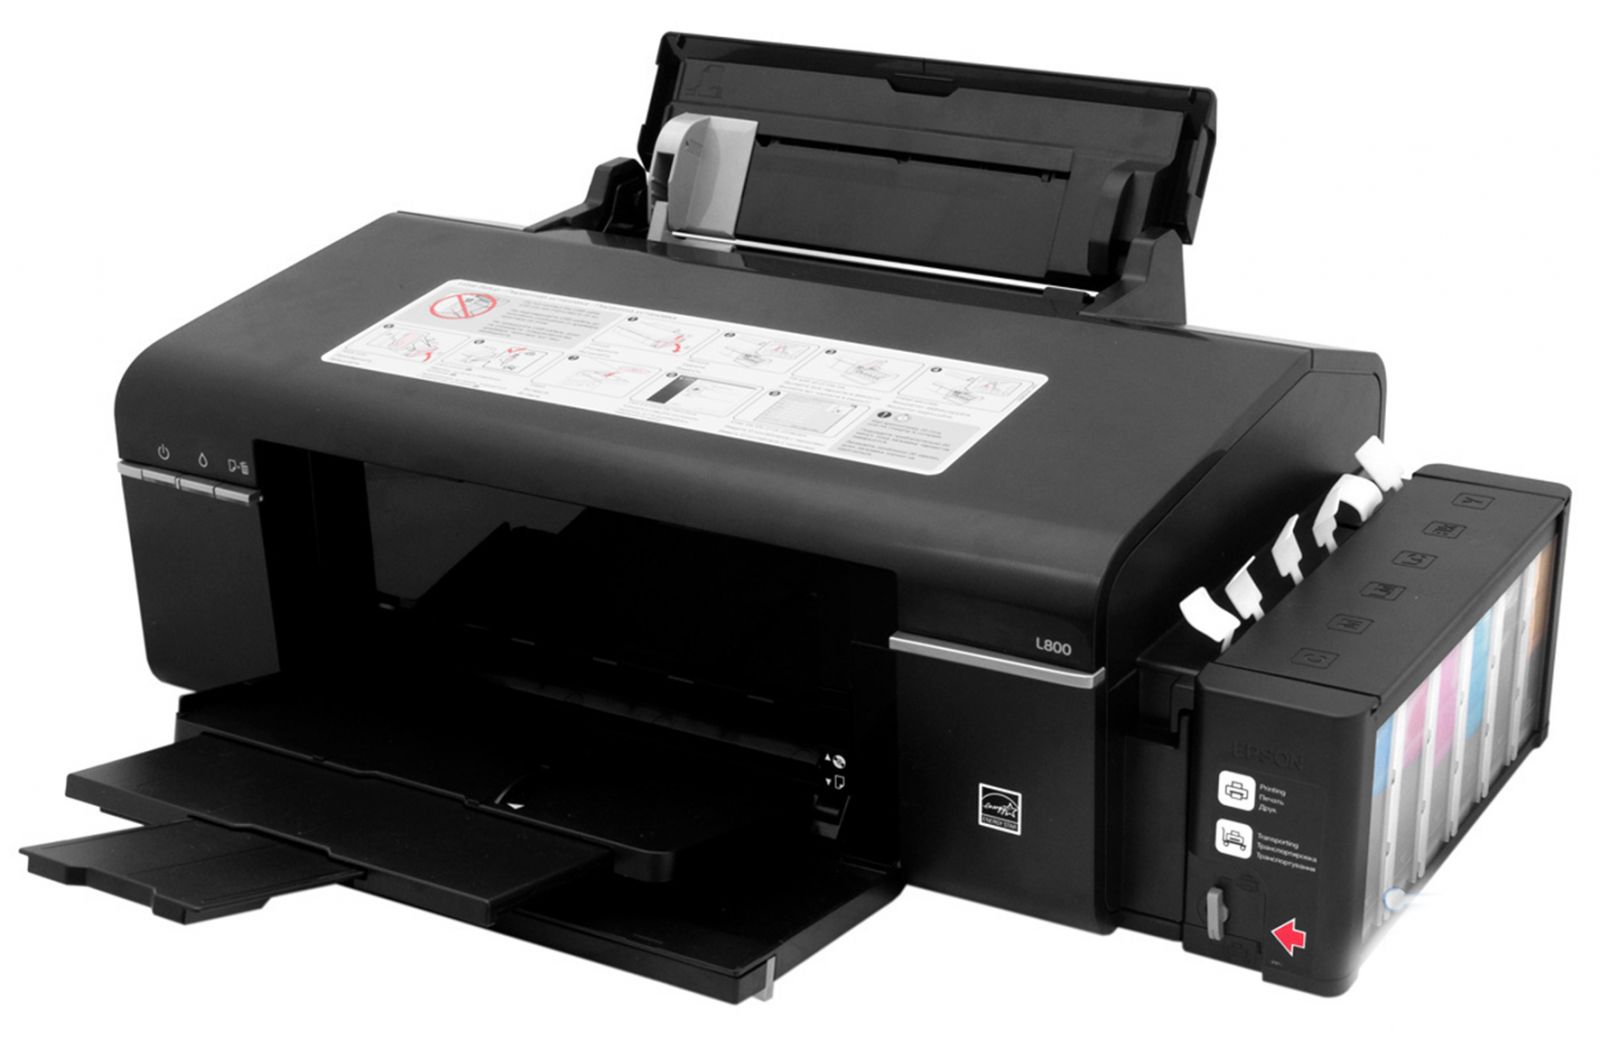 Epson print l805. Принтер Epson l800. Эпсон МФУ L 800. Струйный принтер Epson l800. Принтер Epson Stylus l800.